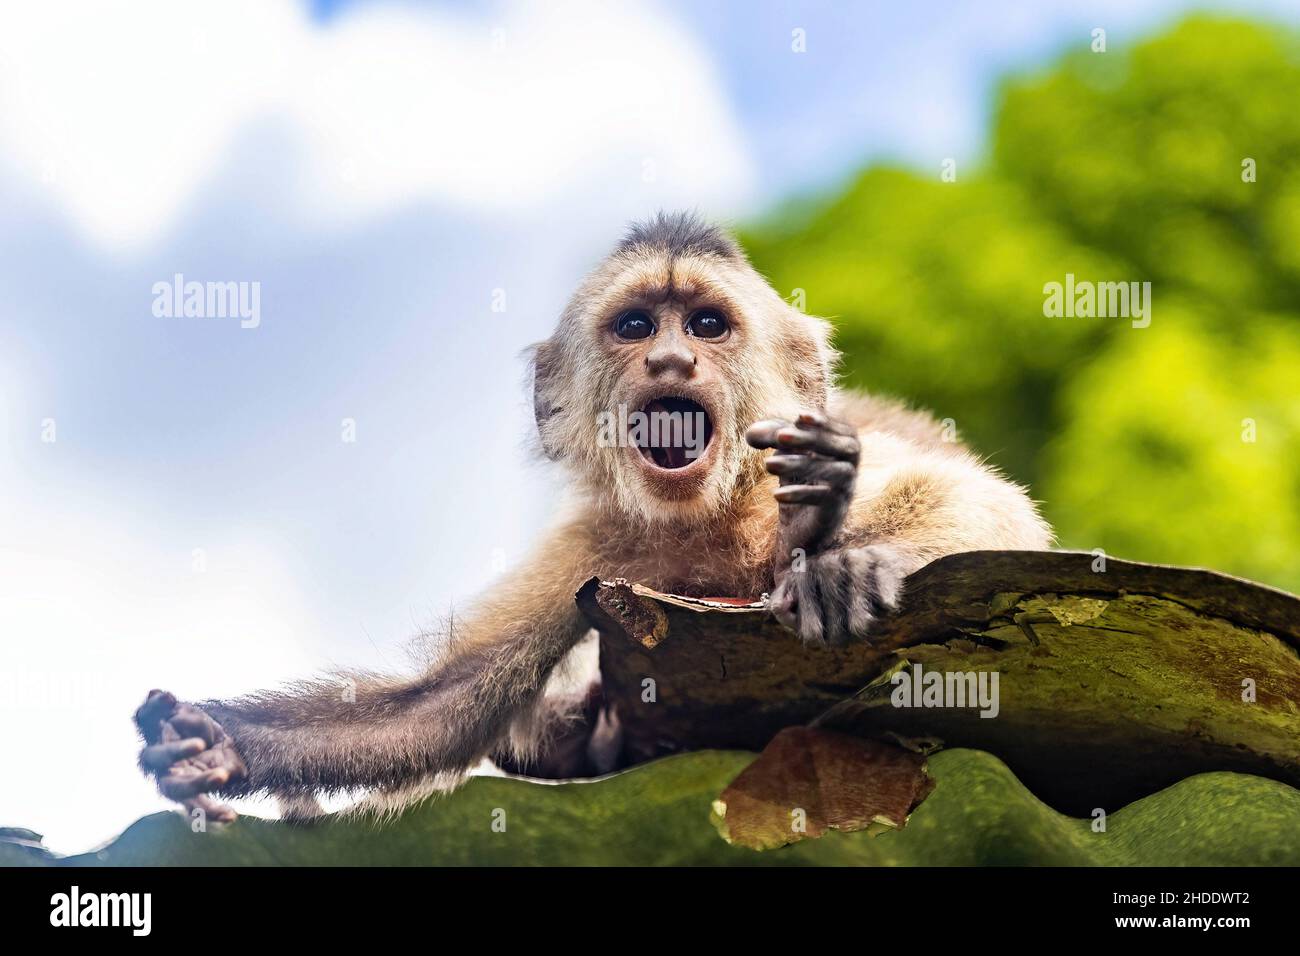 Screaming portrait of capuchin wild monkey close up Stock Photo